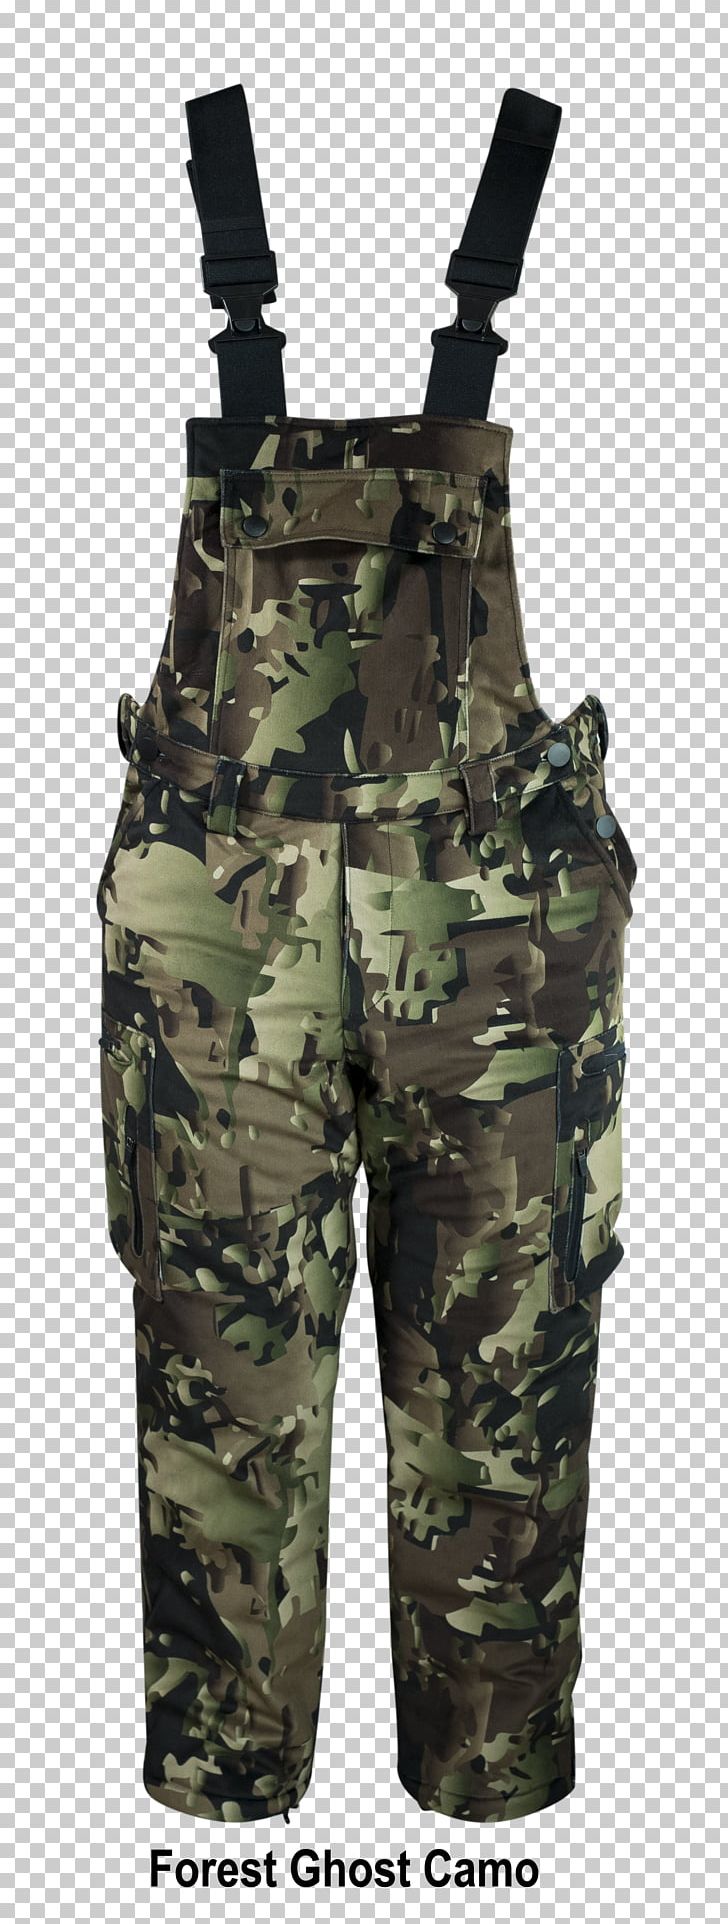 Military Uniform Military Camouflage Pocket Pants PNG, Clipart, Military, Military Camouflage, Military Uniform, Miscellaneous, Mountain Lion Free PNG Download